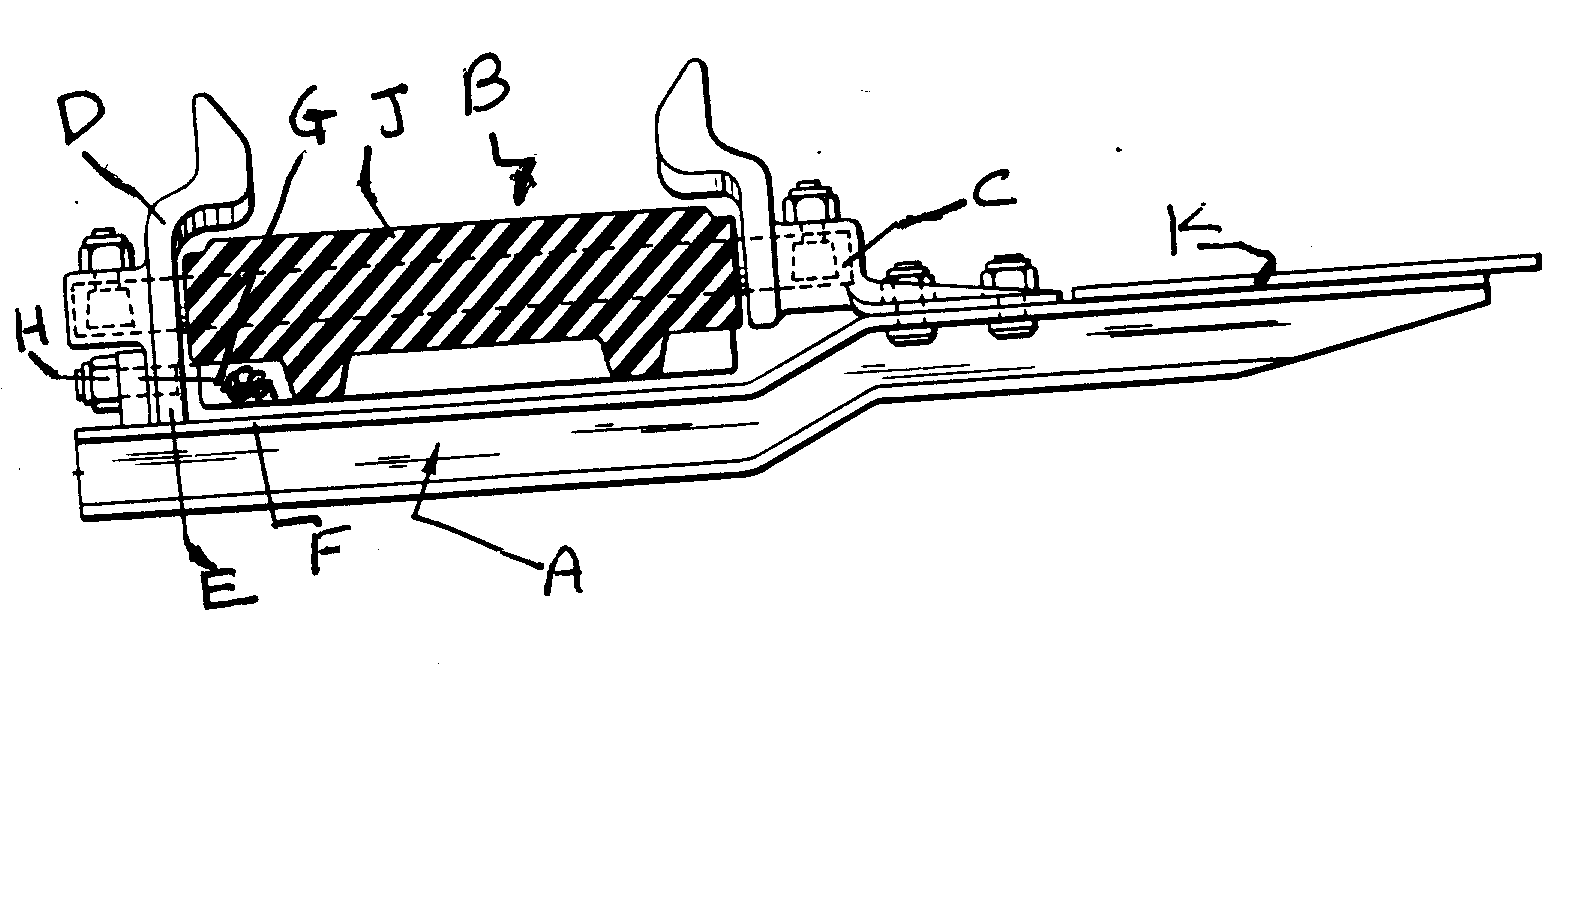 A - Grouser plate; B - Track (endless); C - Extended end connector (outboard side); D - End connector (inboard side); R - Flange portion;F - Grouser base portion; G - Grouser bracket; H - Bolt aperture;J - Nonmetallic block; K - Flotation plate
